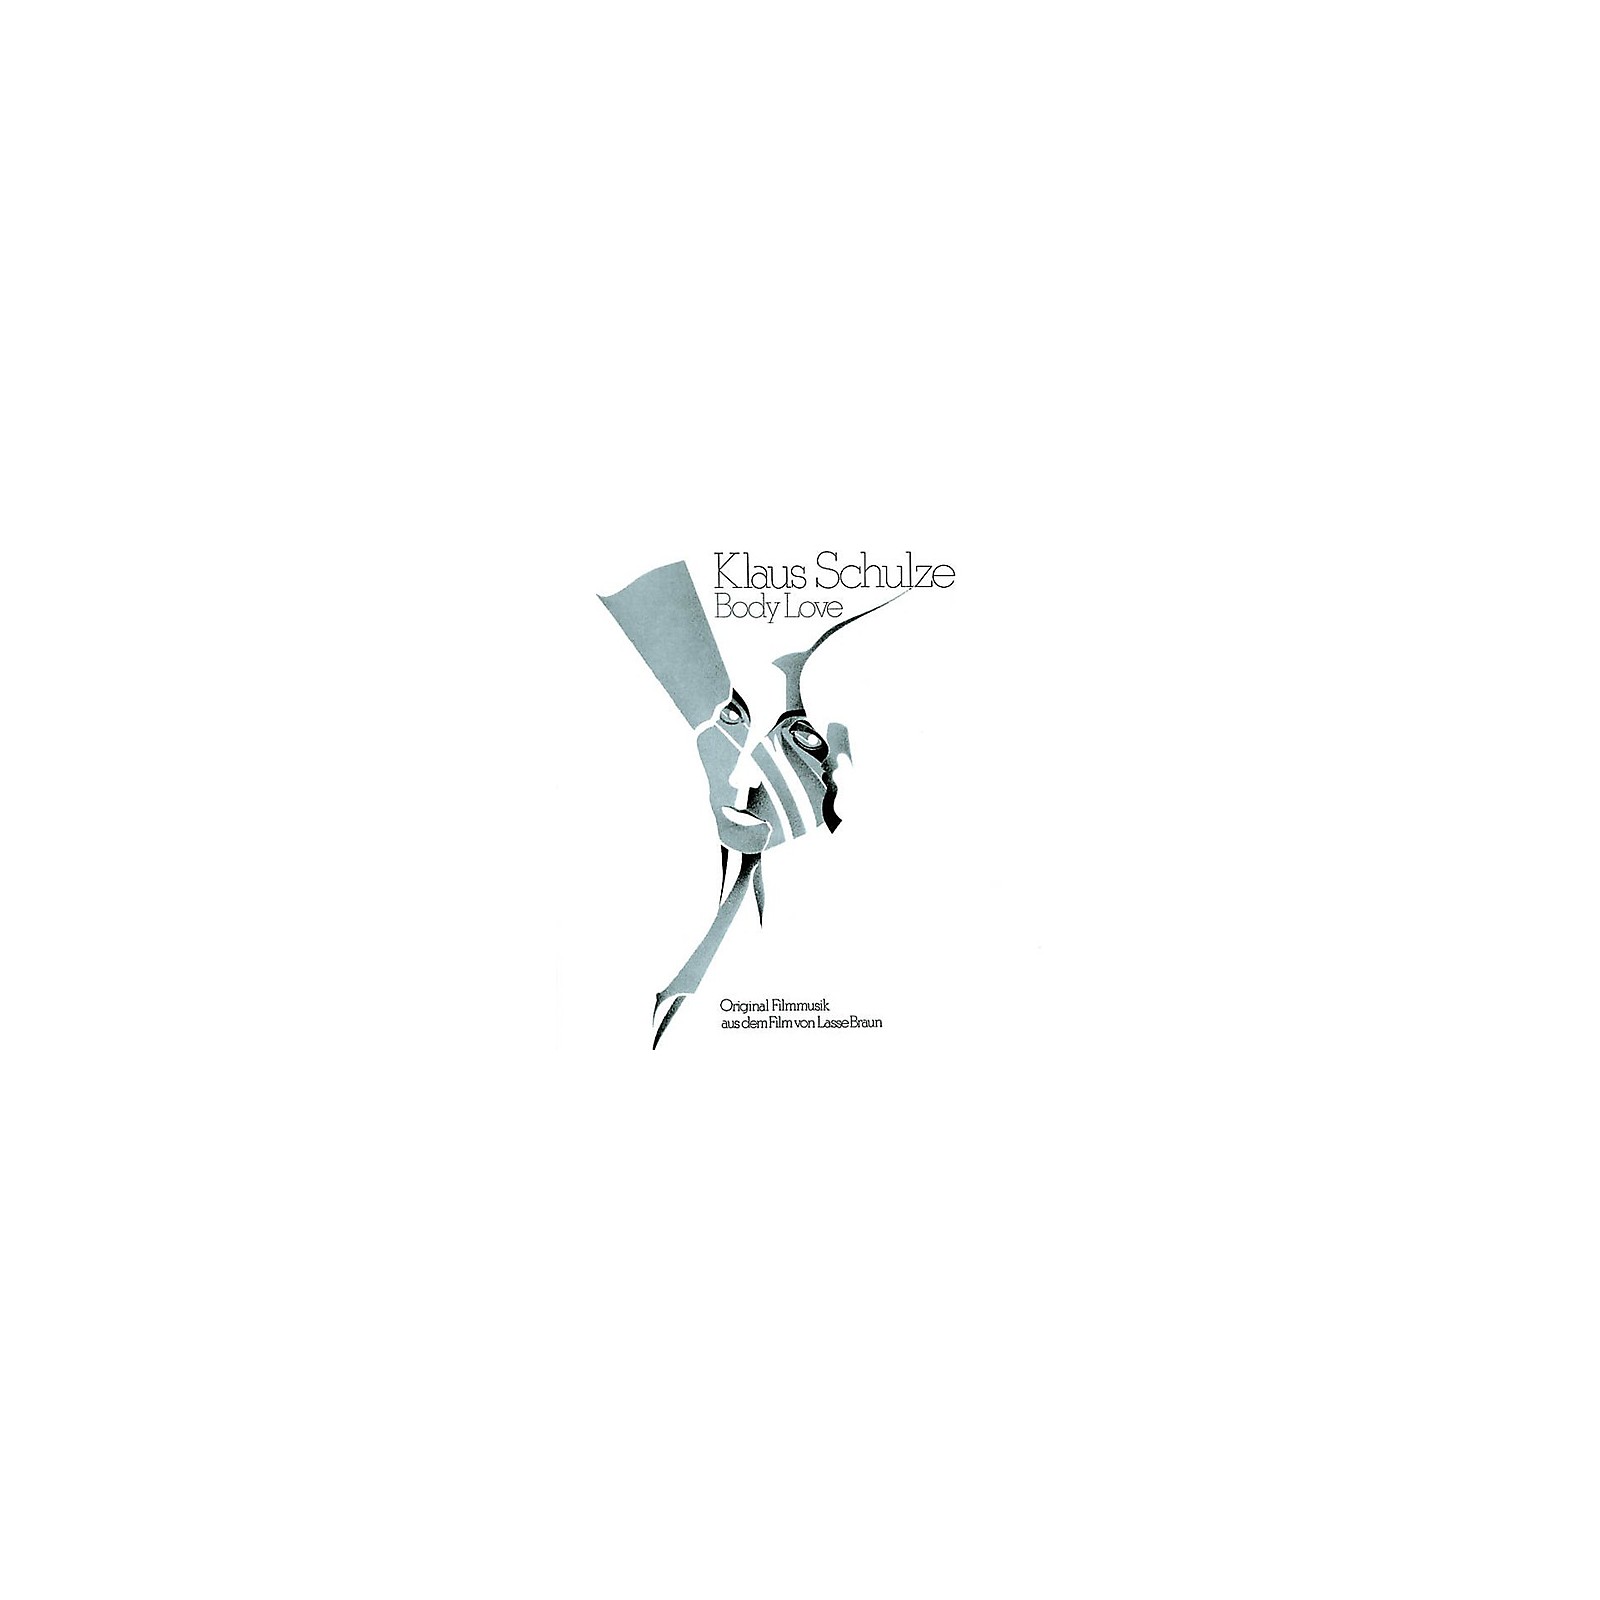 Klaus Schulze Body Love Original Soundtrack Musician